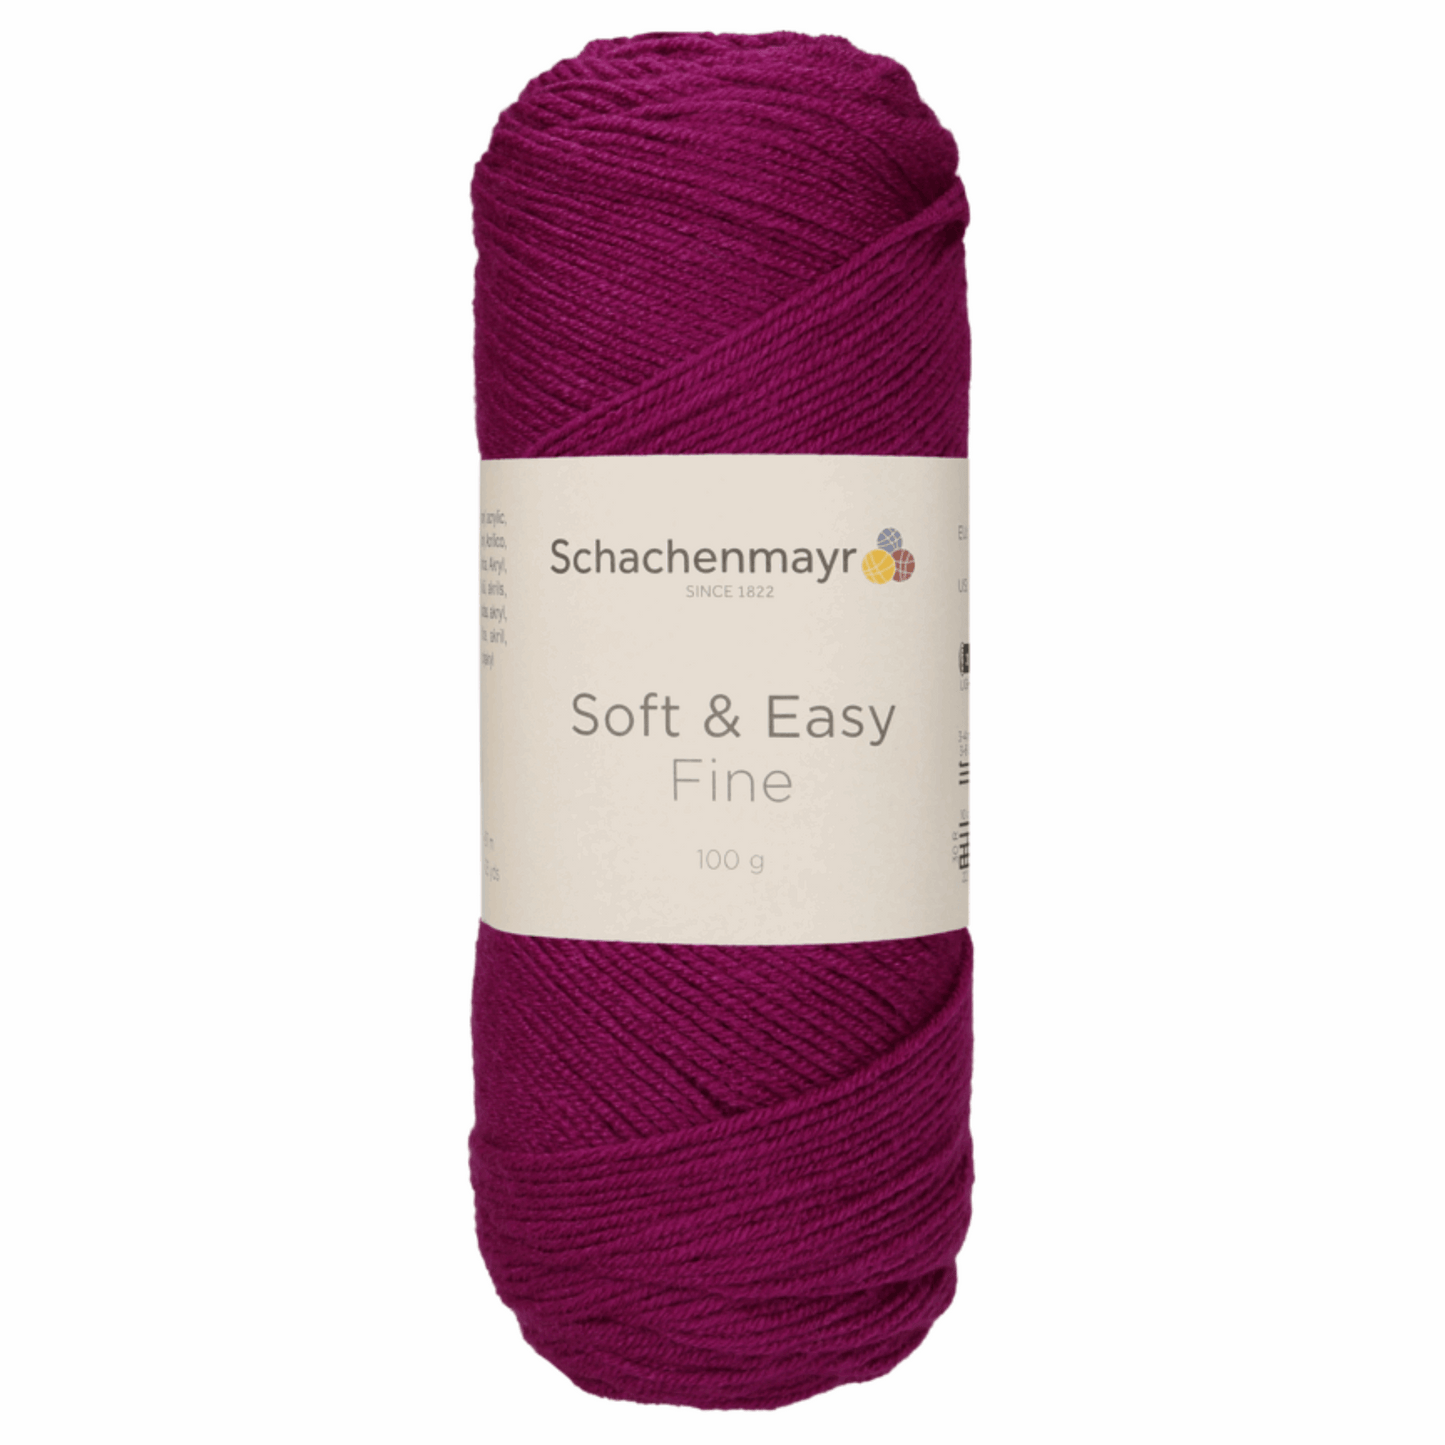 Schachenmayr Soft & Easy Fine 100g, 90402, Farbe Orchidee 34